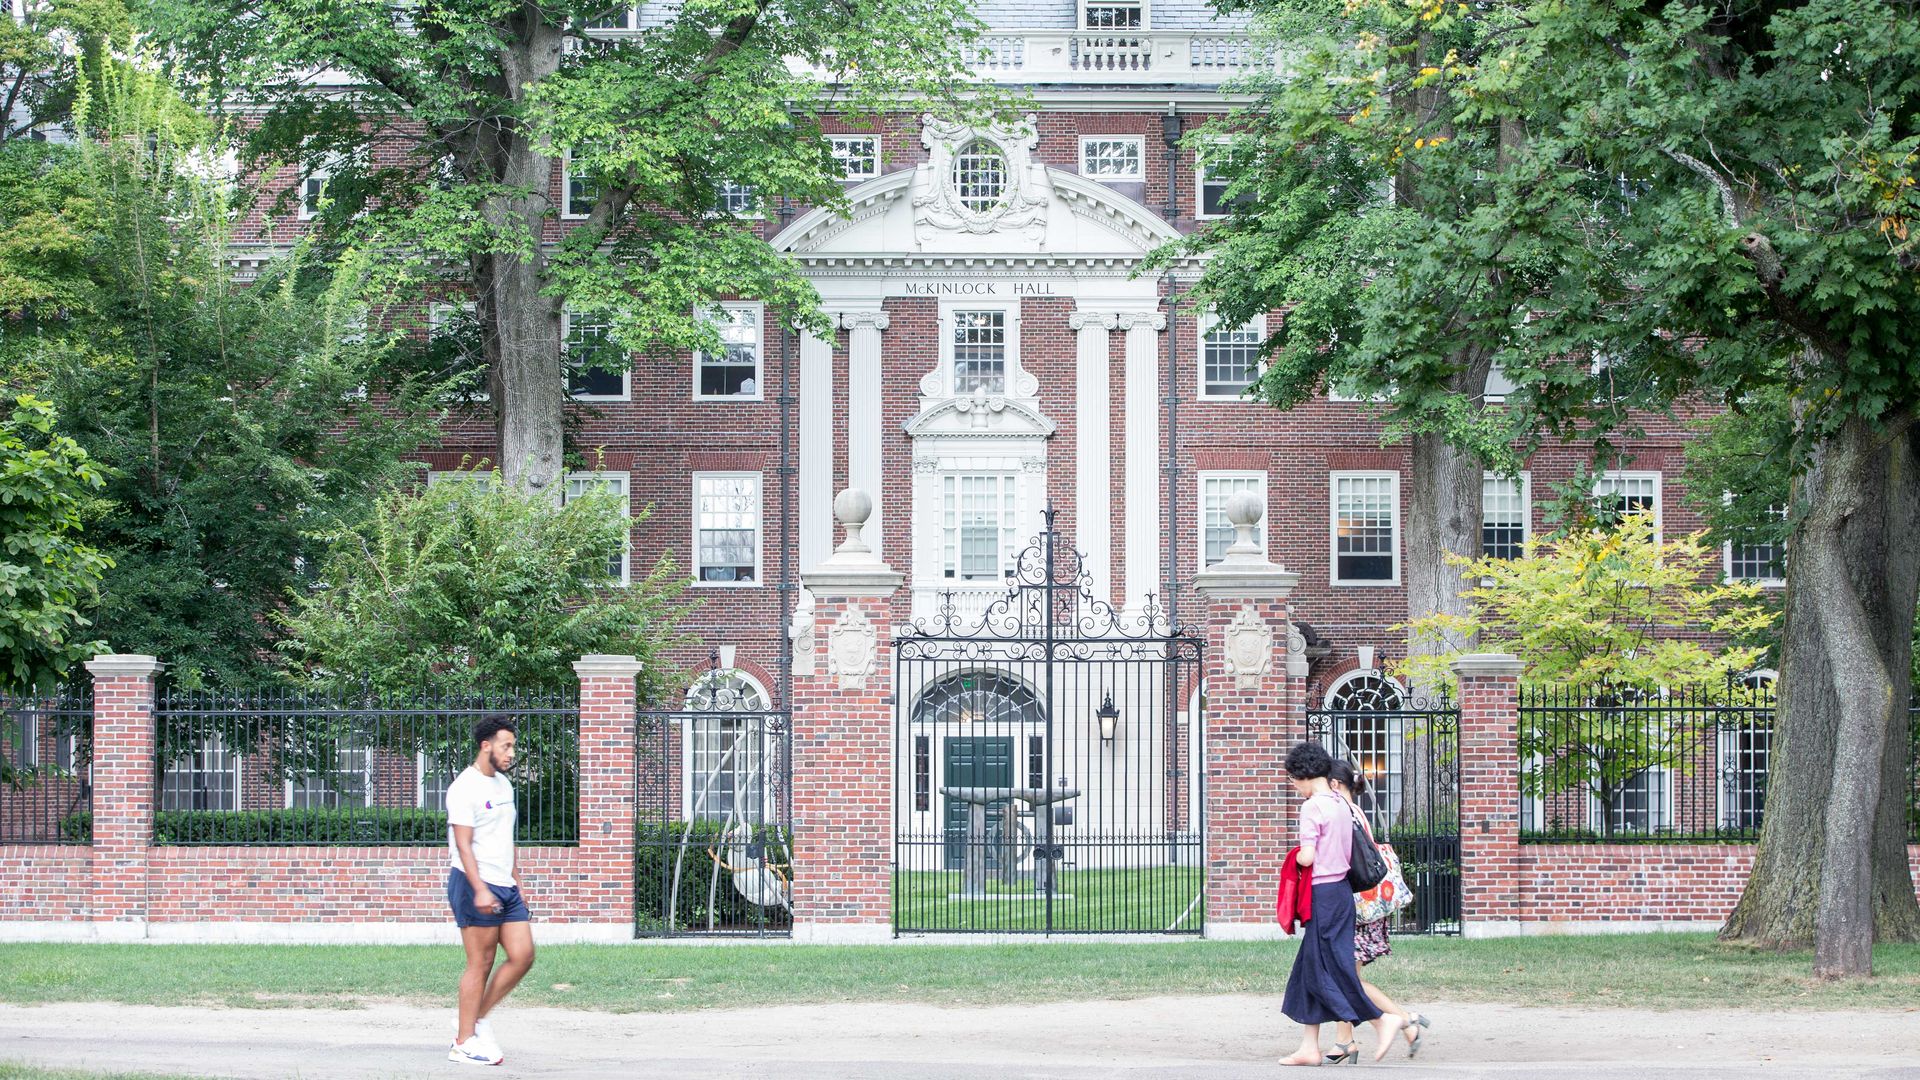  Pedestrians walk past a Harvard University building on August 30, 2018 in Cambridge, Massachusetts